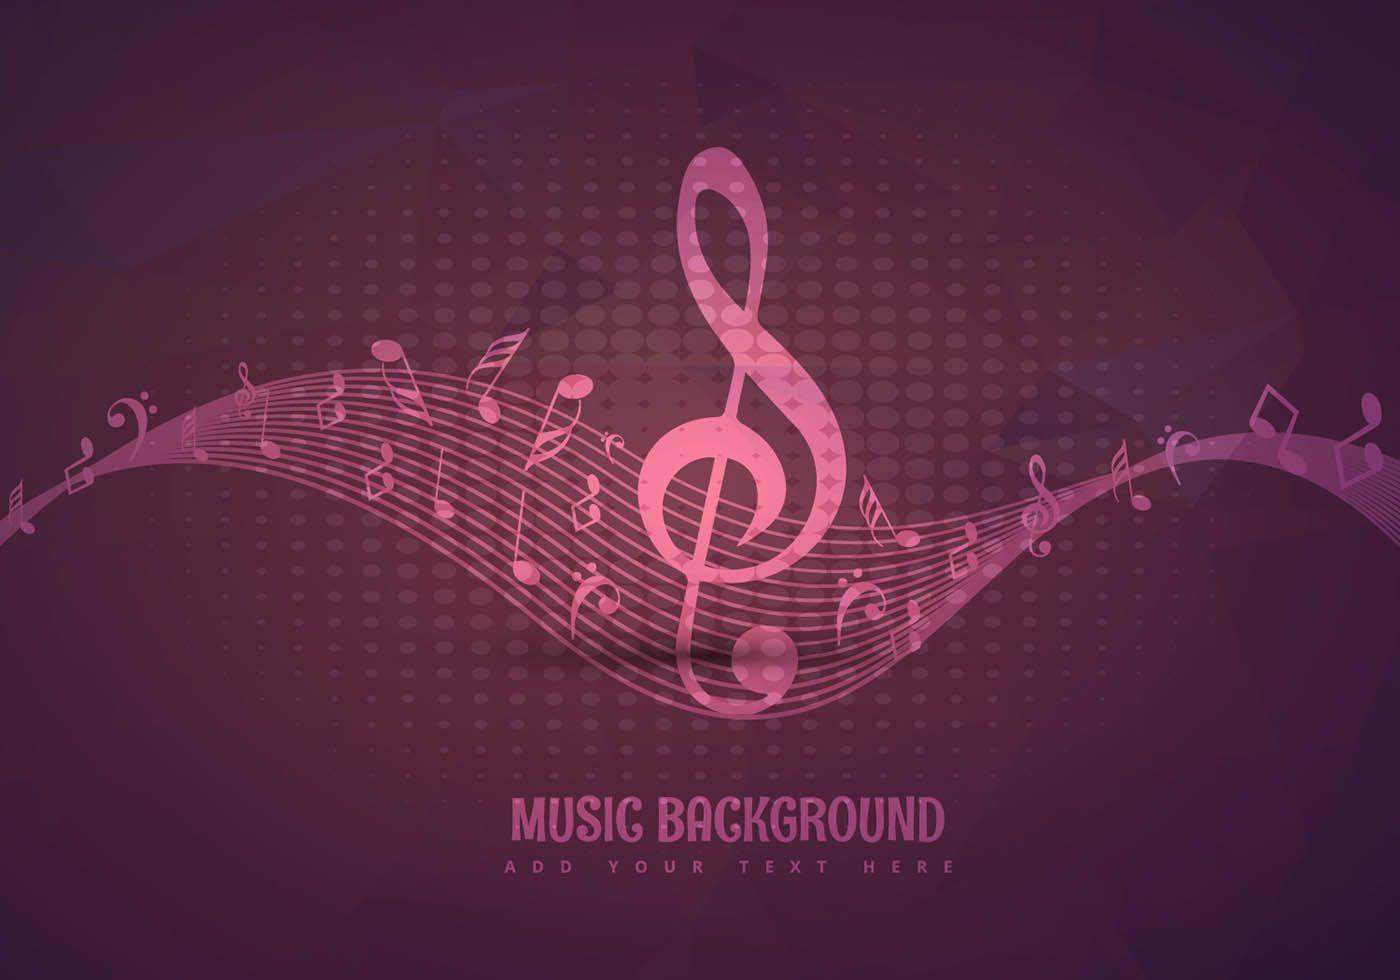 Music background design Free Vector Art, Stock Graphics